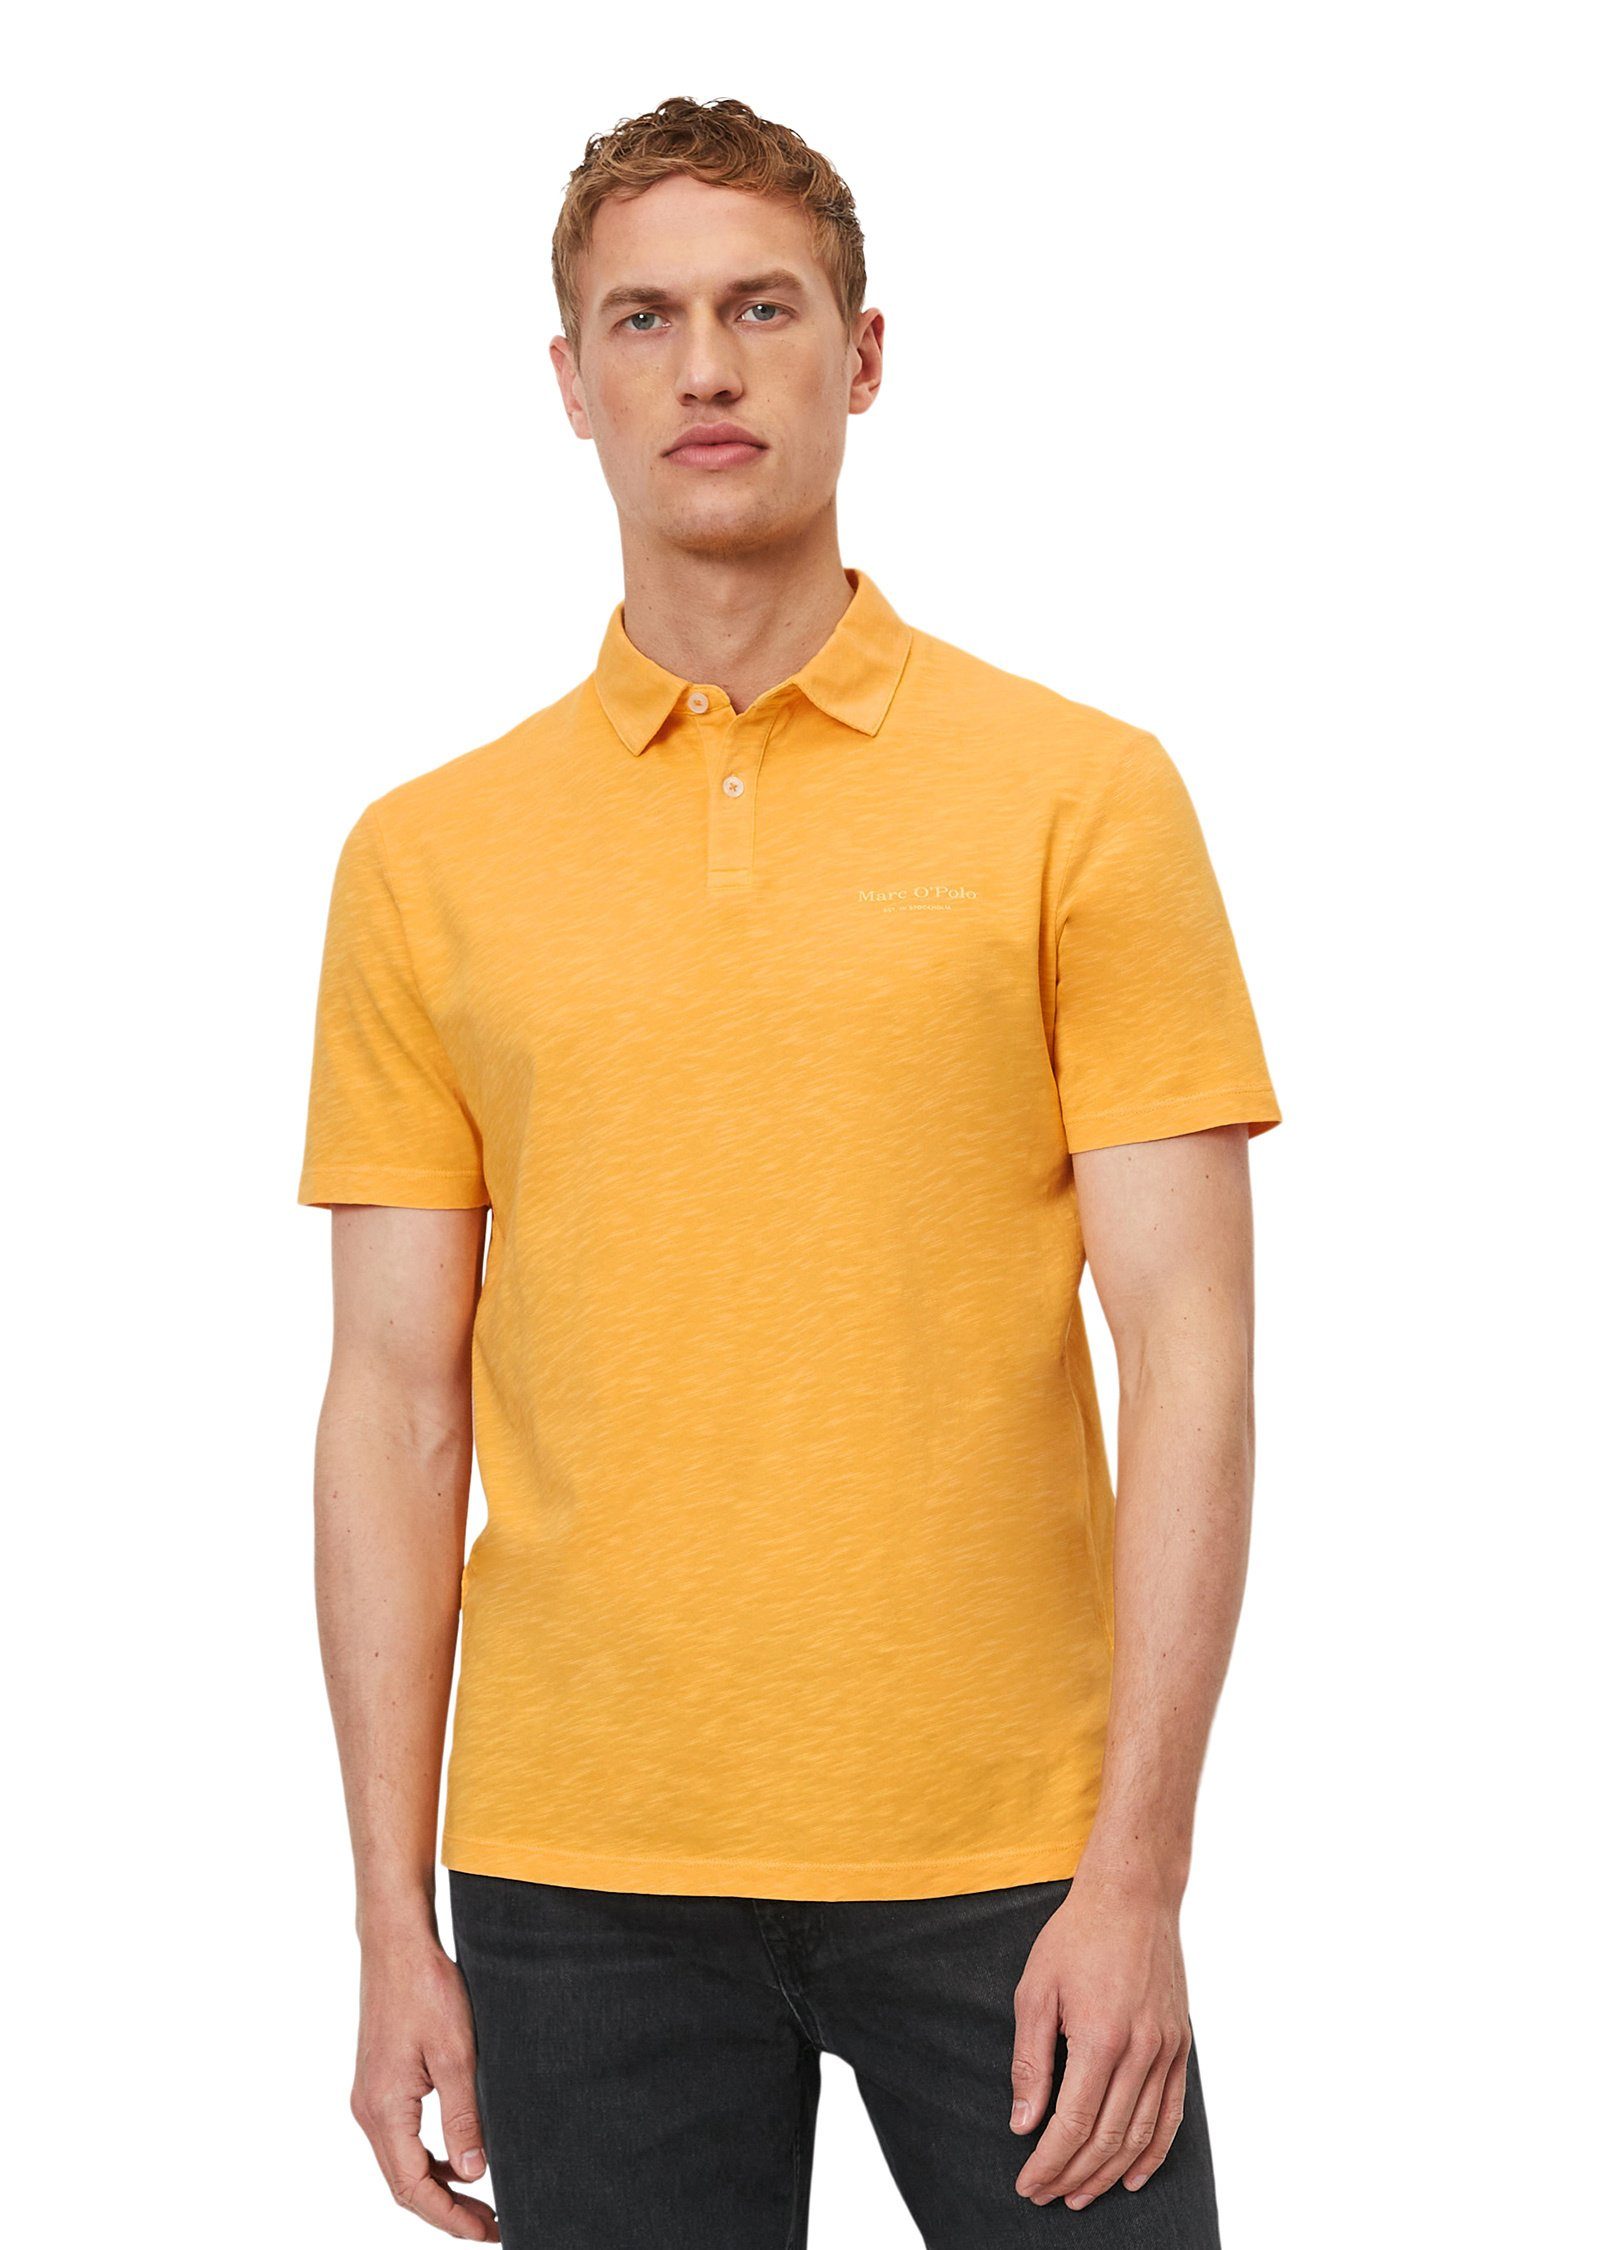 Marc O'Polo Poloshirt aus hochwertiger Bio-Baumwolle orange